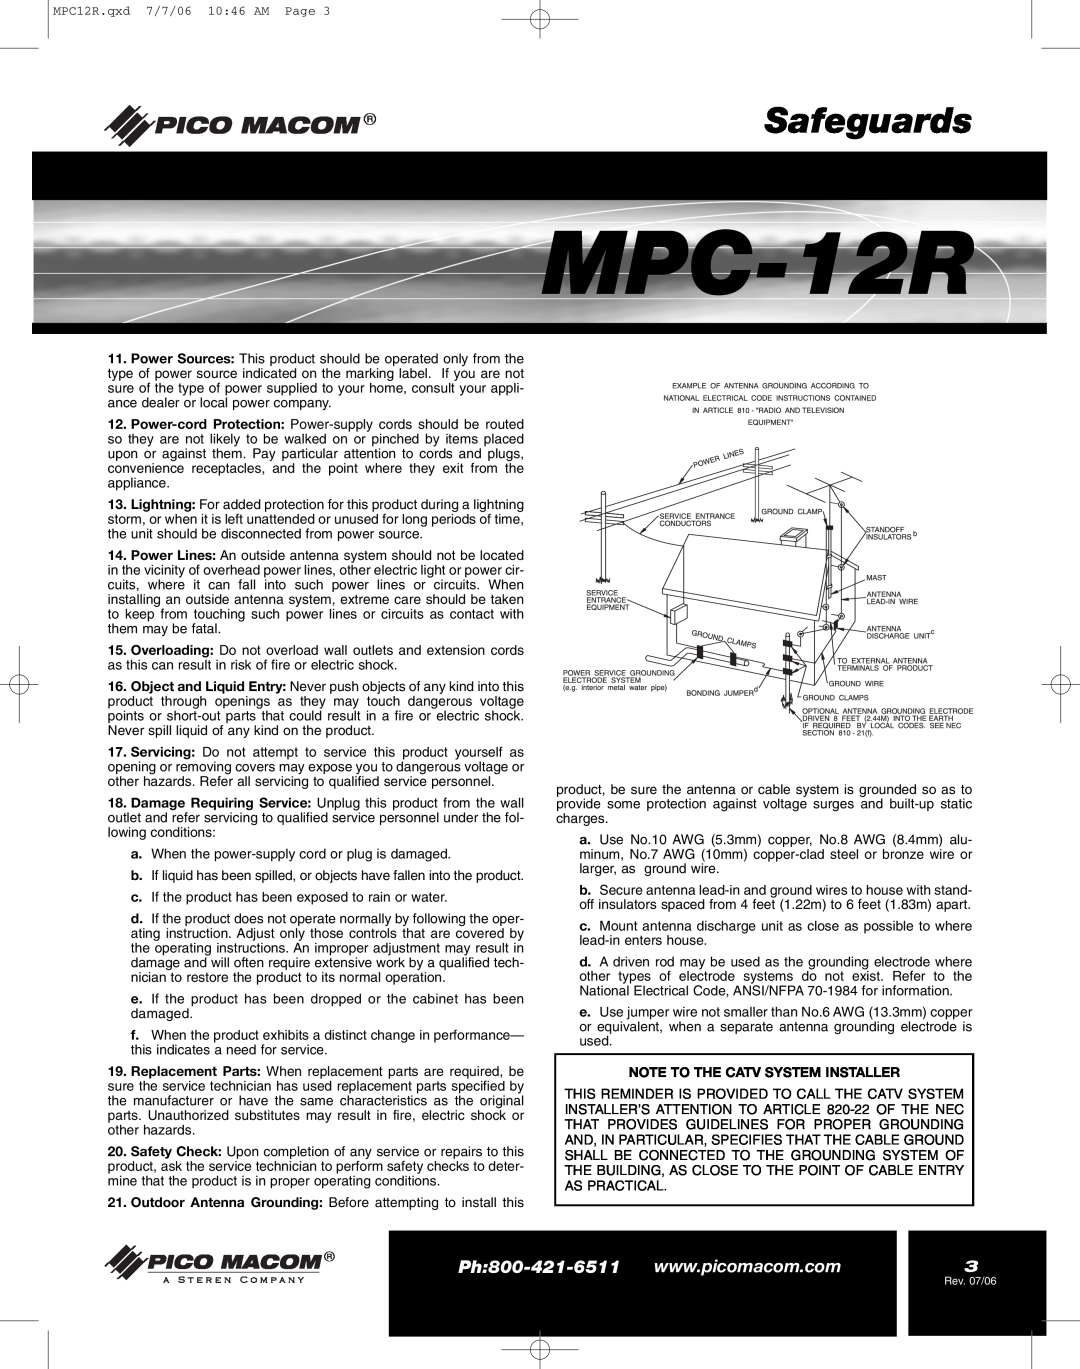 Pico Macom MPC-12R manual Safeguards, Note To The Catv System Installer 